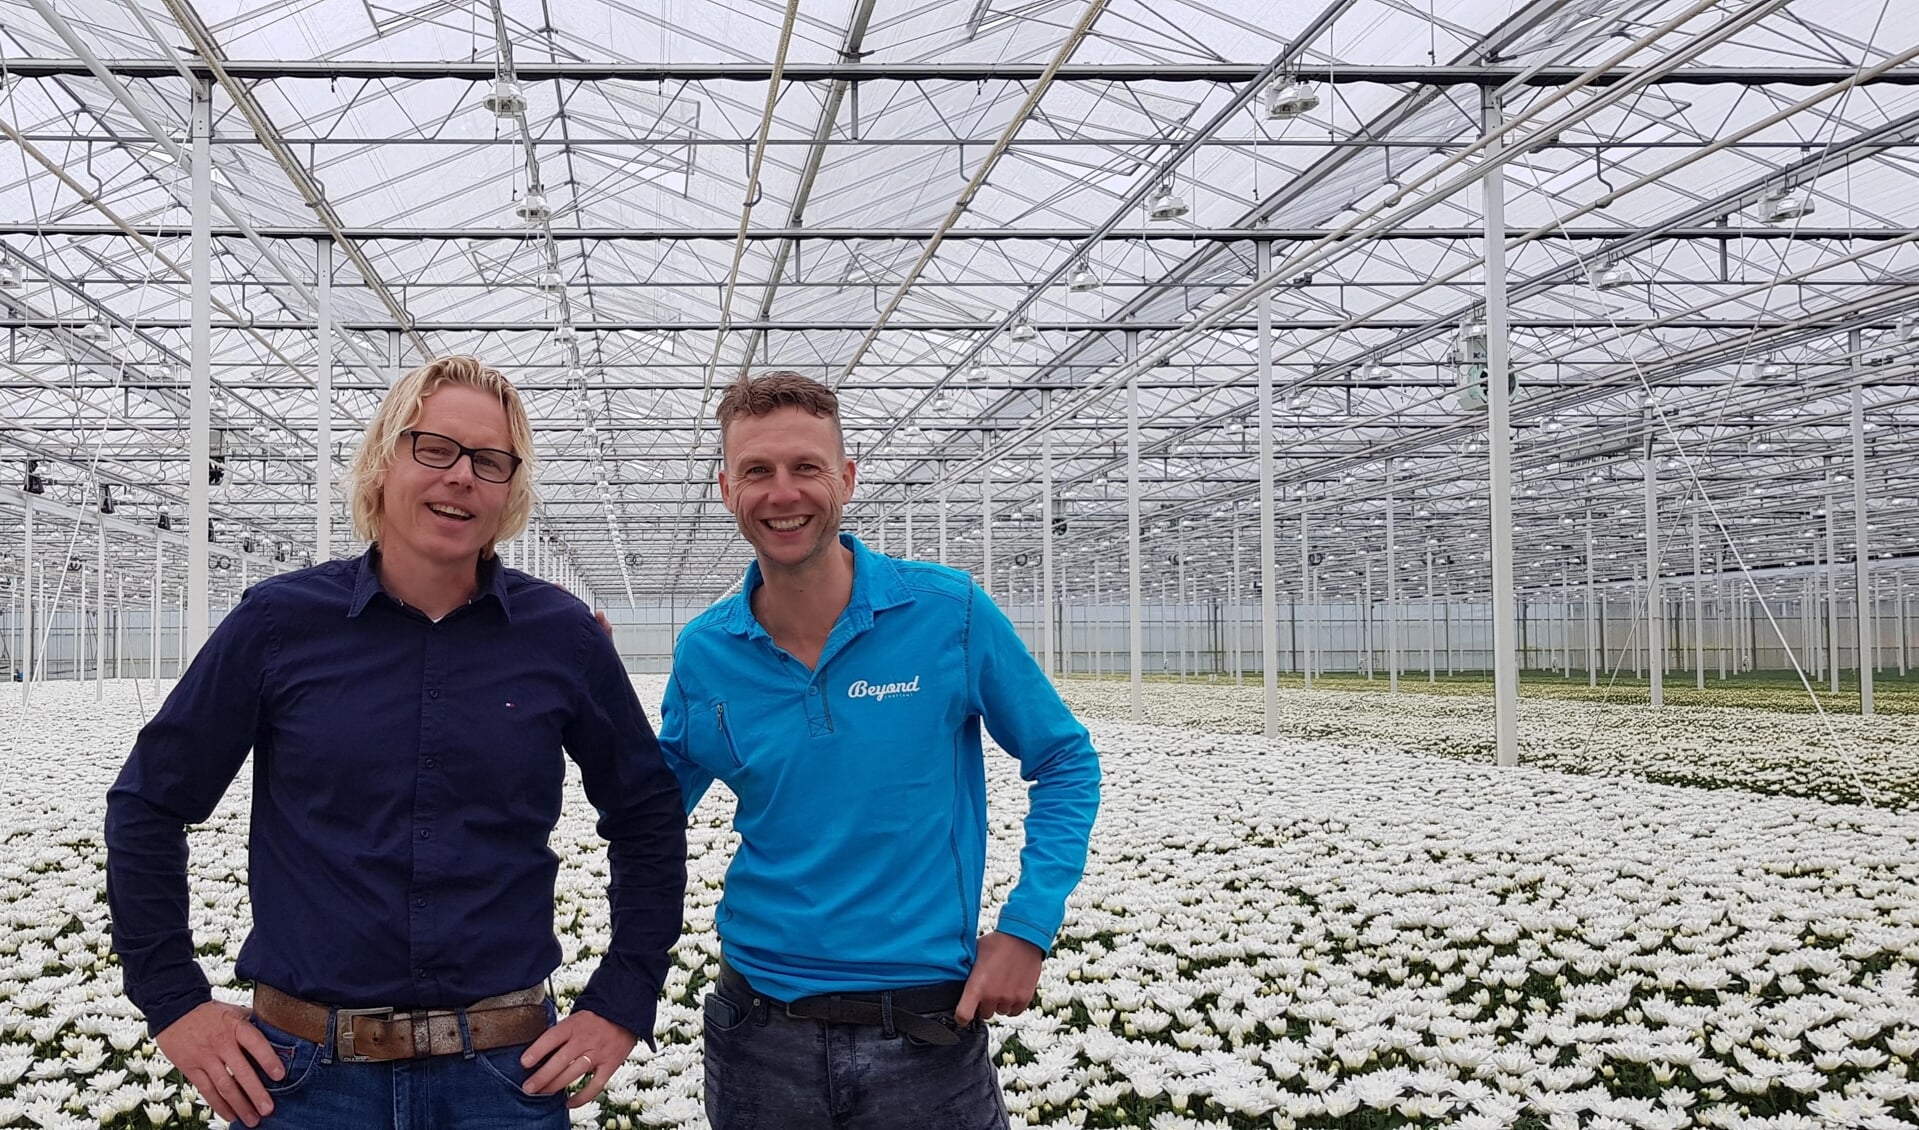 Links Dirk van Vuurde, Royal FloraHolland productmanager Chrysant en Alstroemeria.
